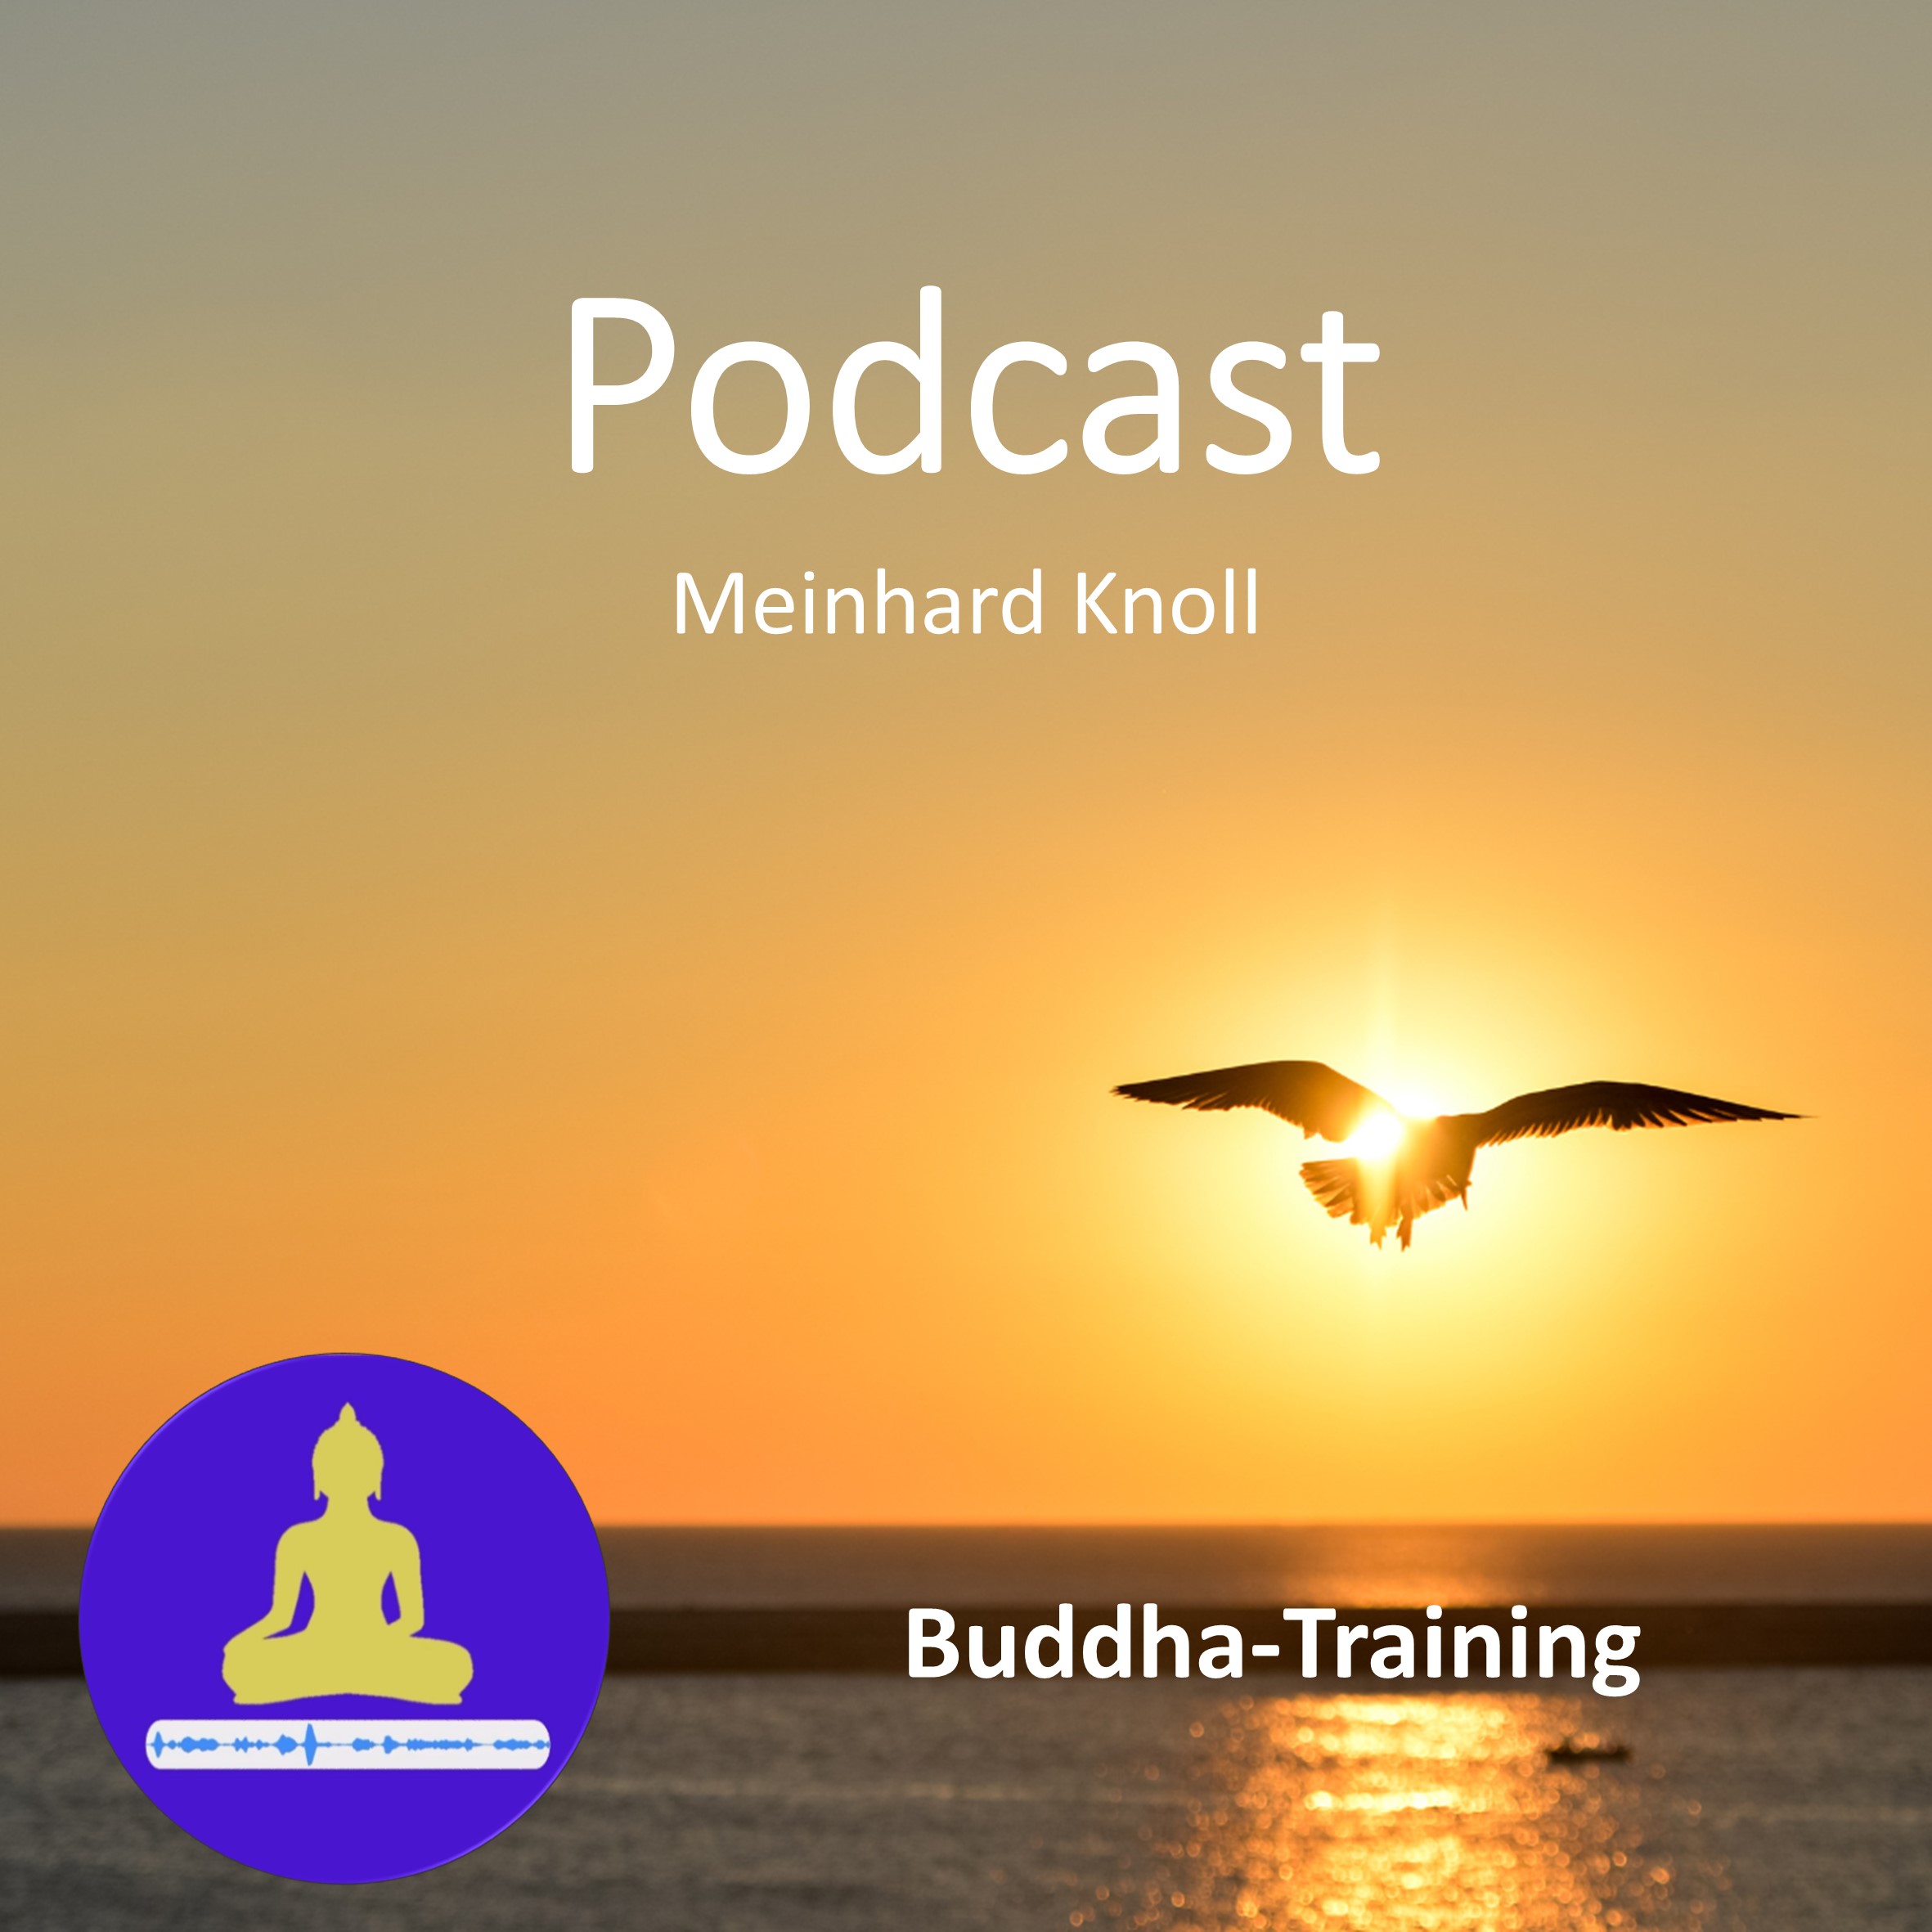 Buddha-Training